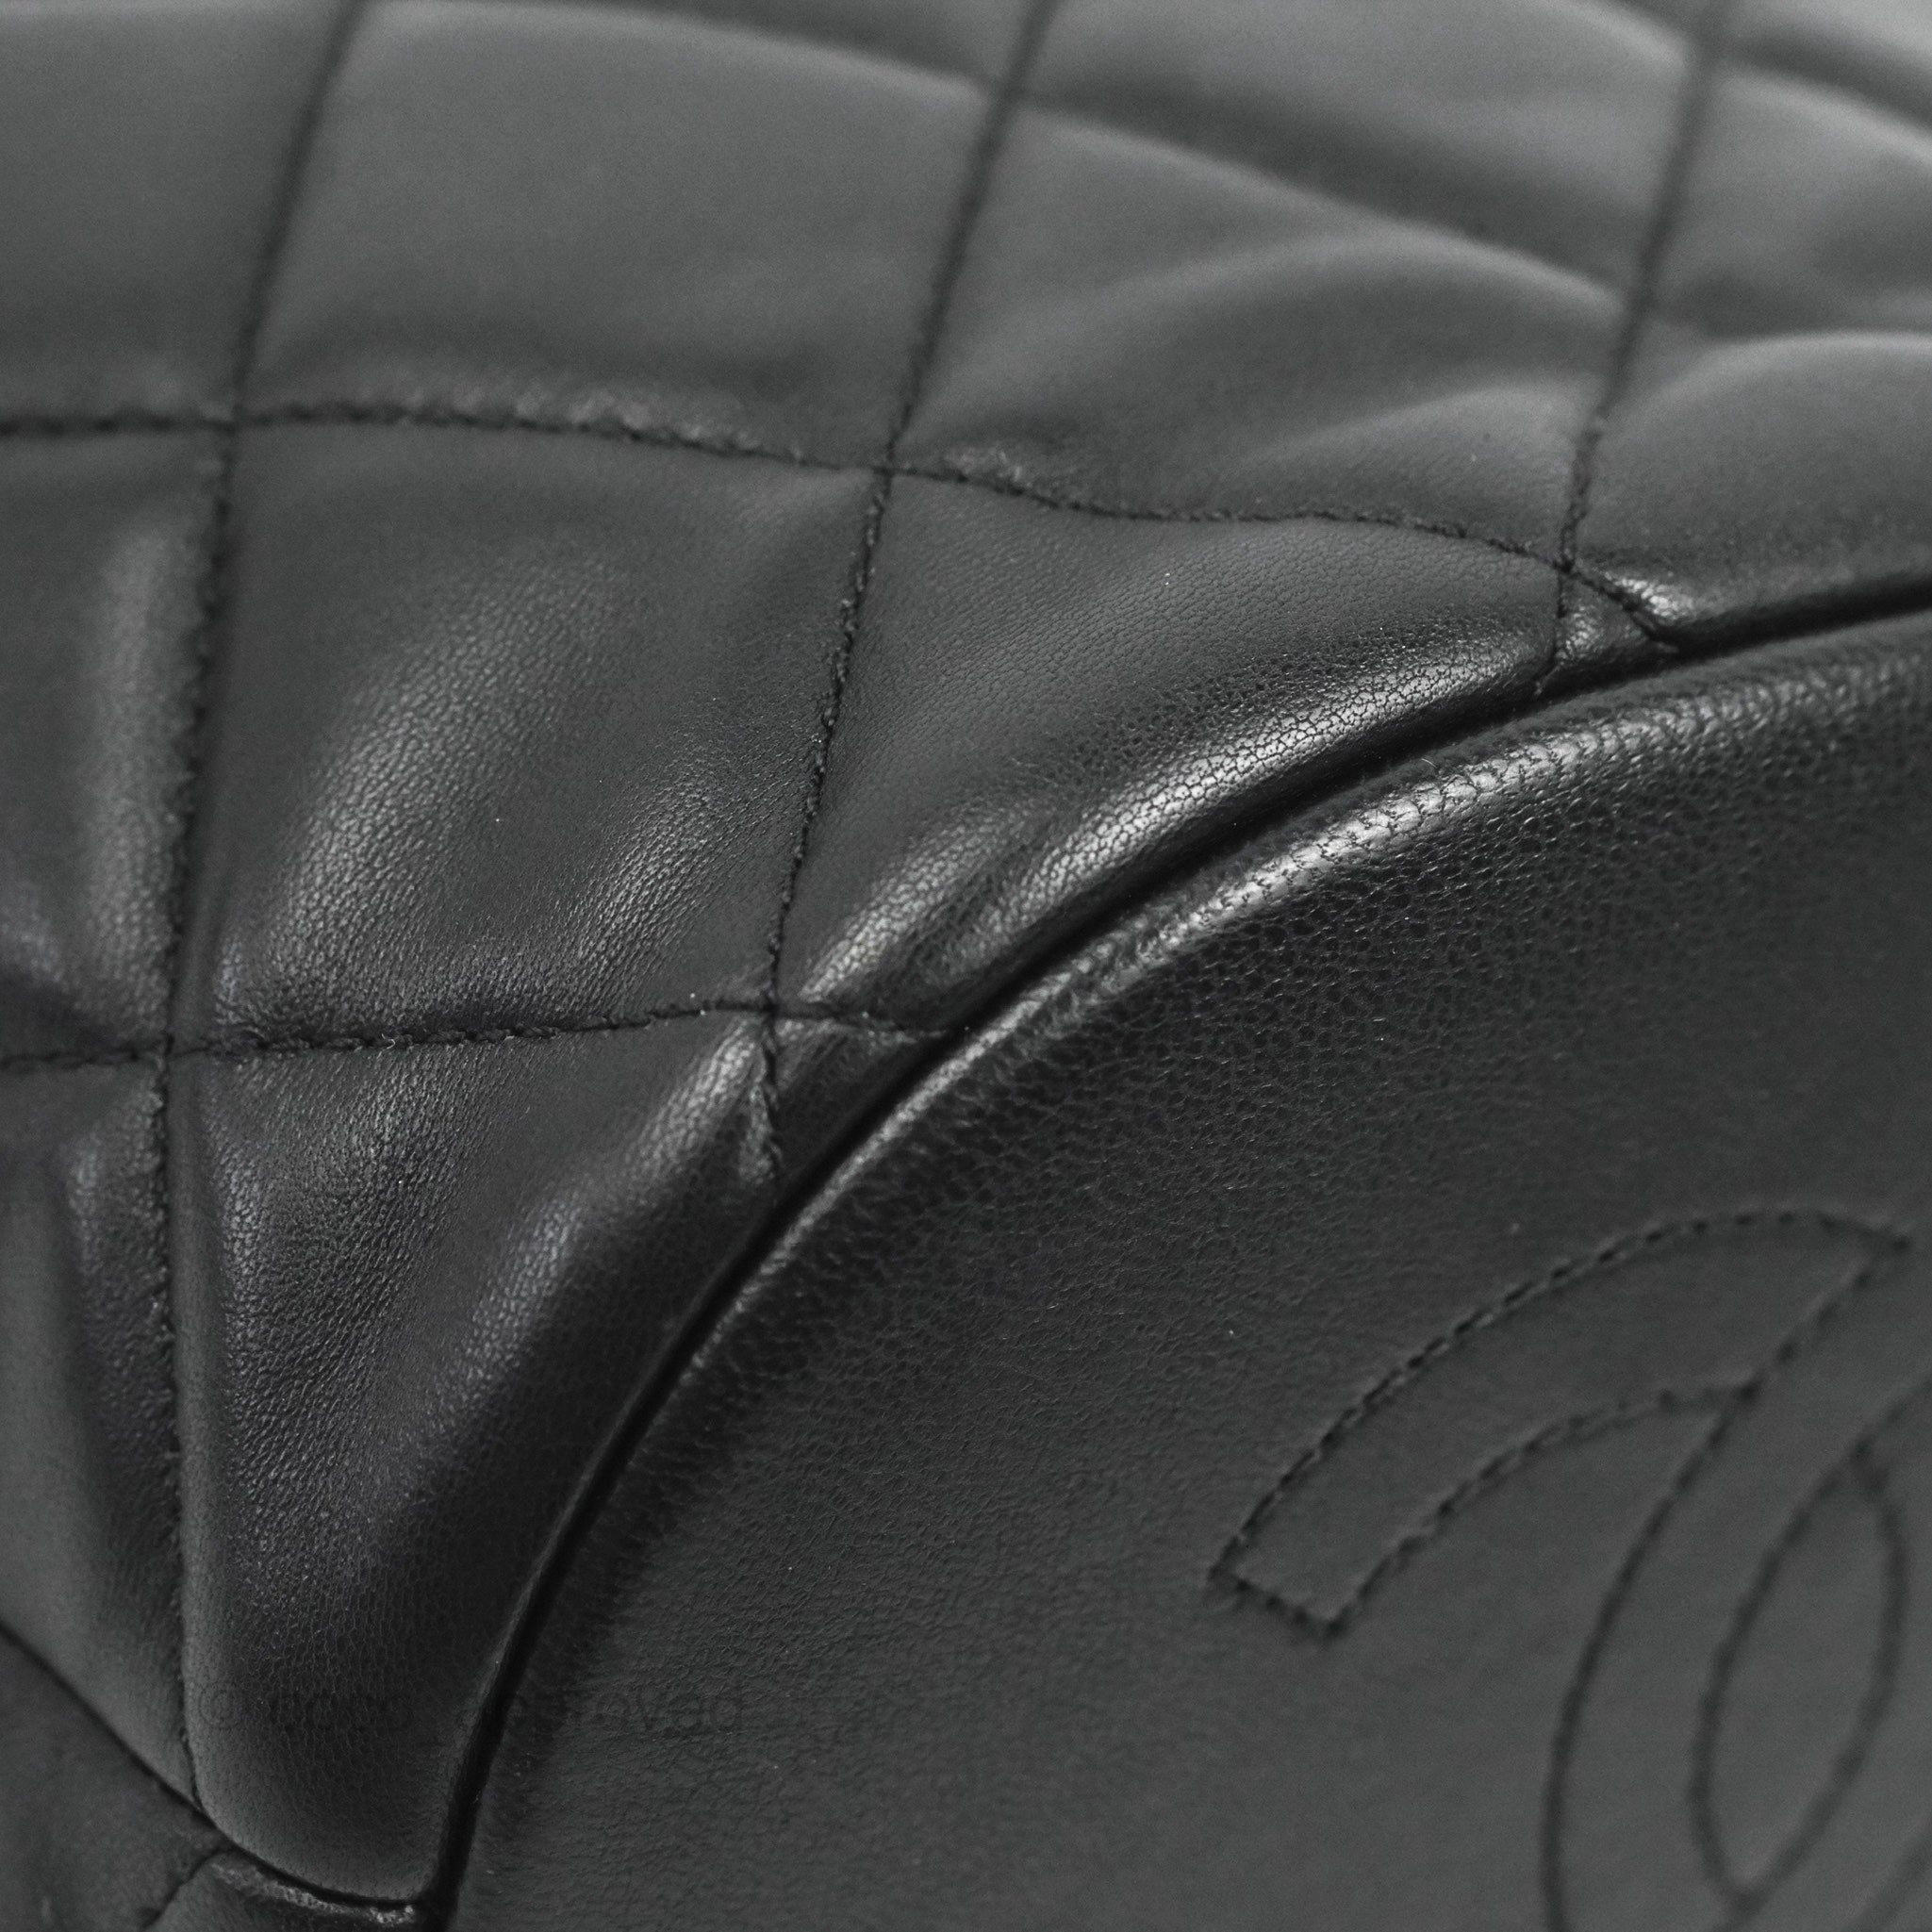 Shop Prada Large Leather Symbole Bag with Topstitching